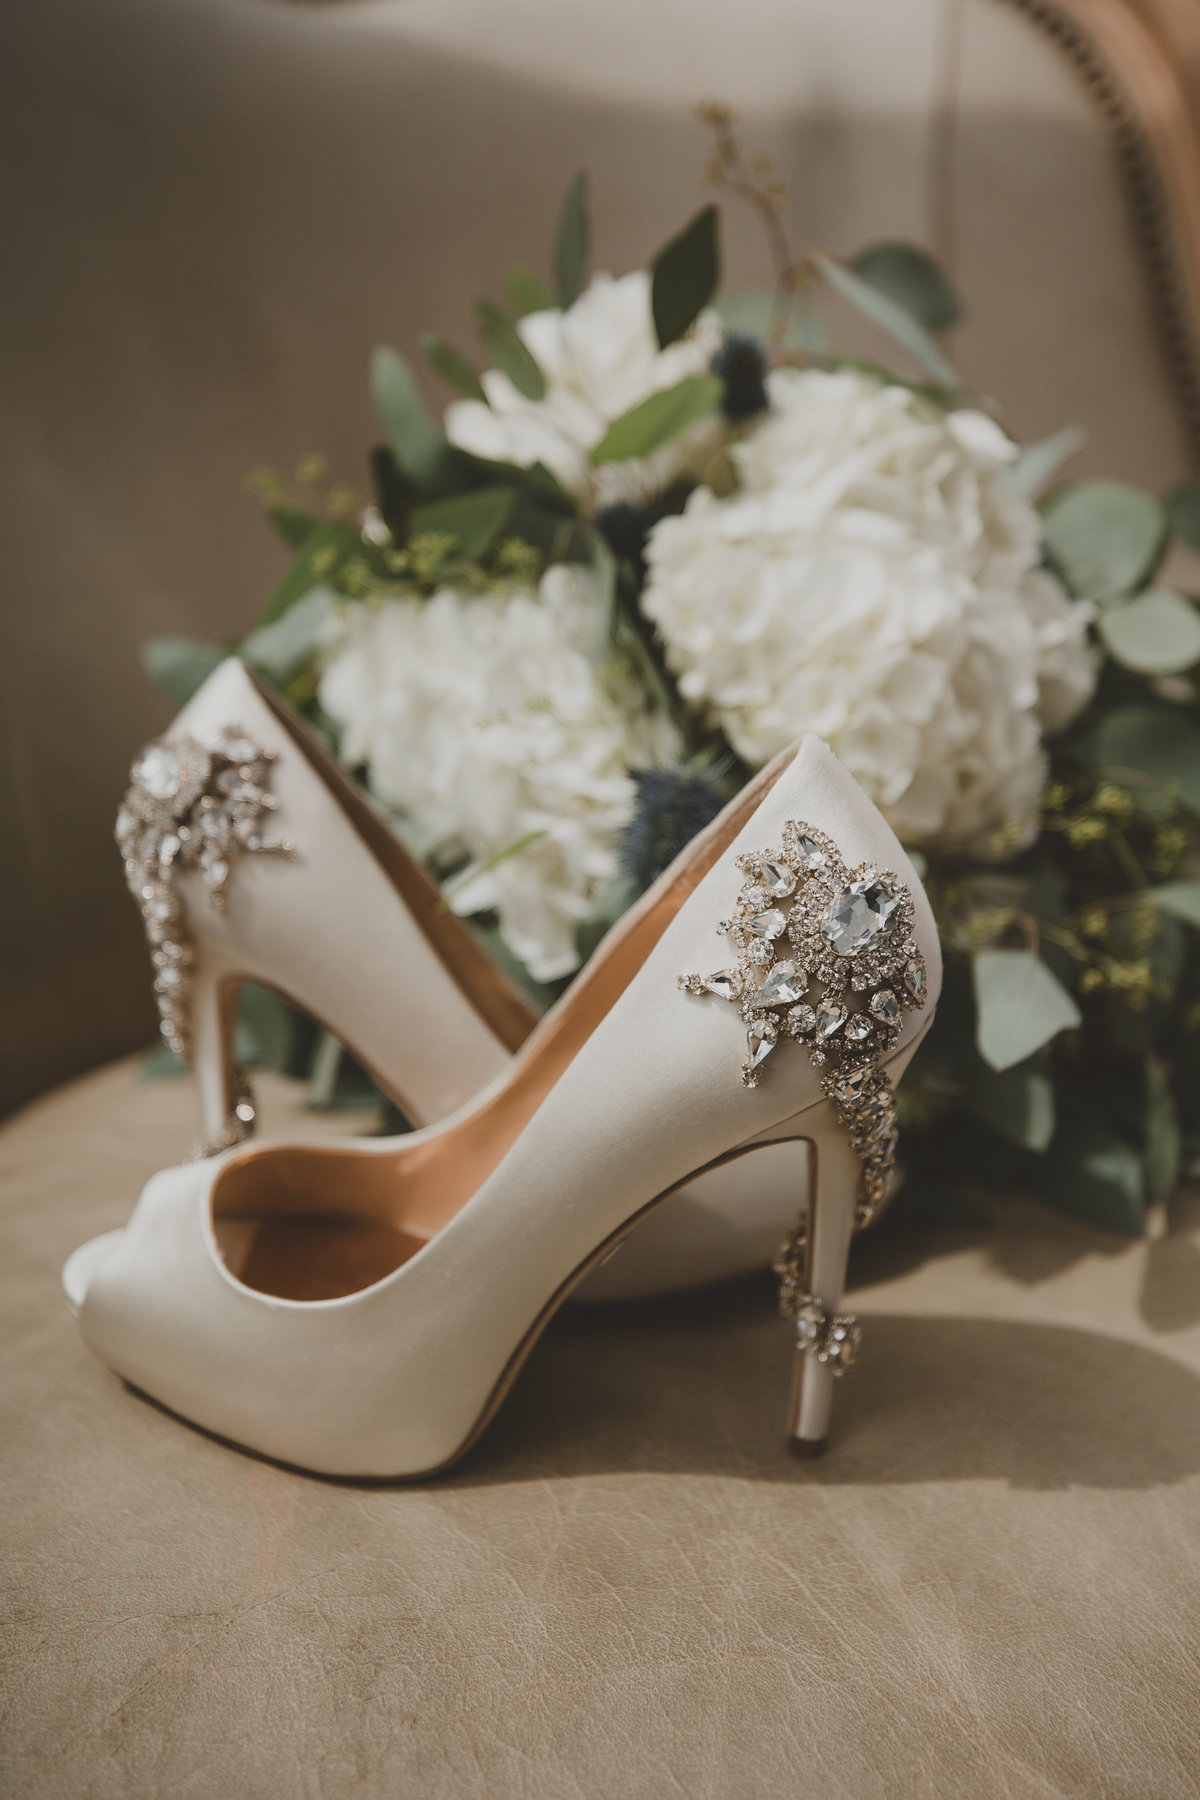 bejeweled wedding heels at Sunsphere